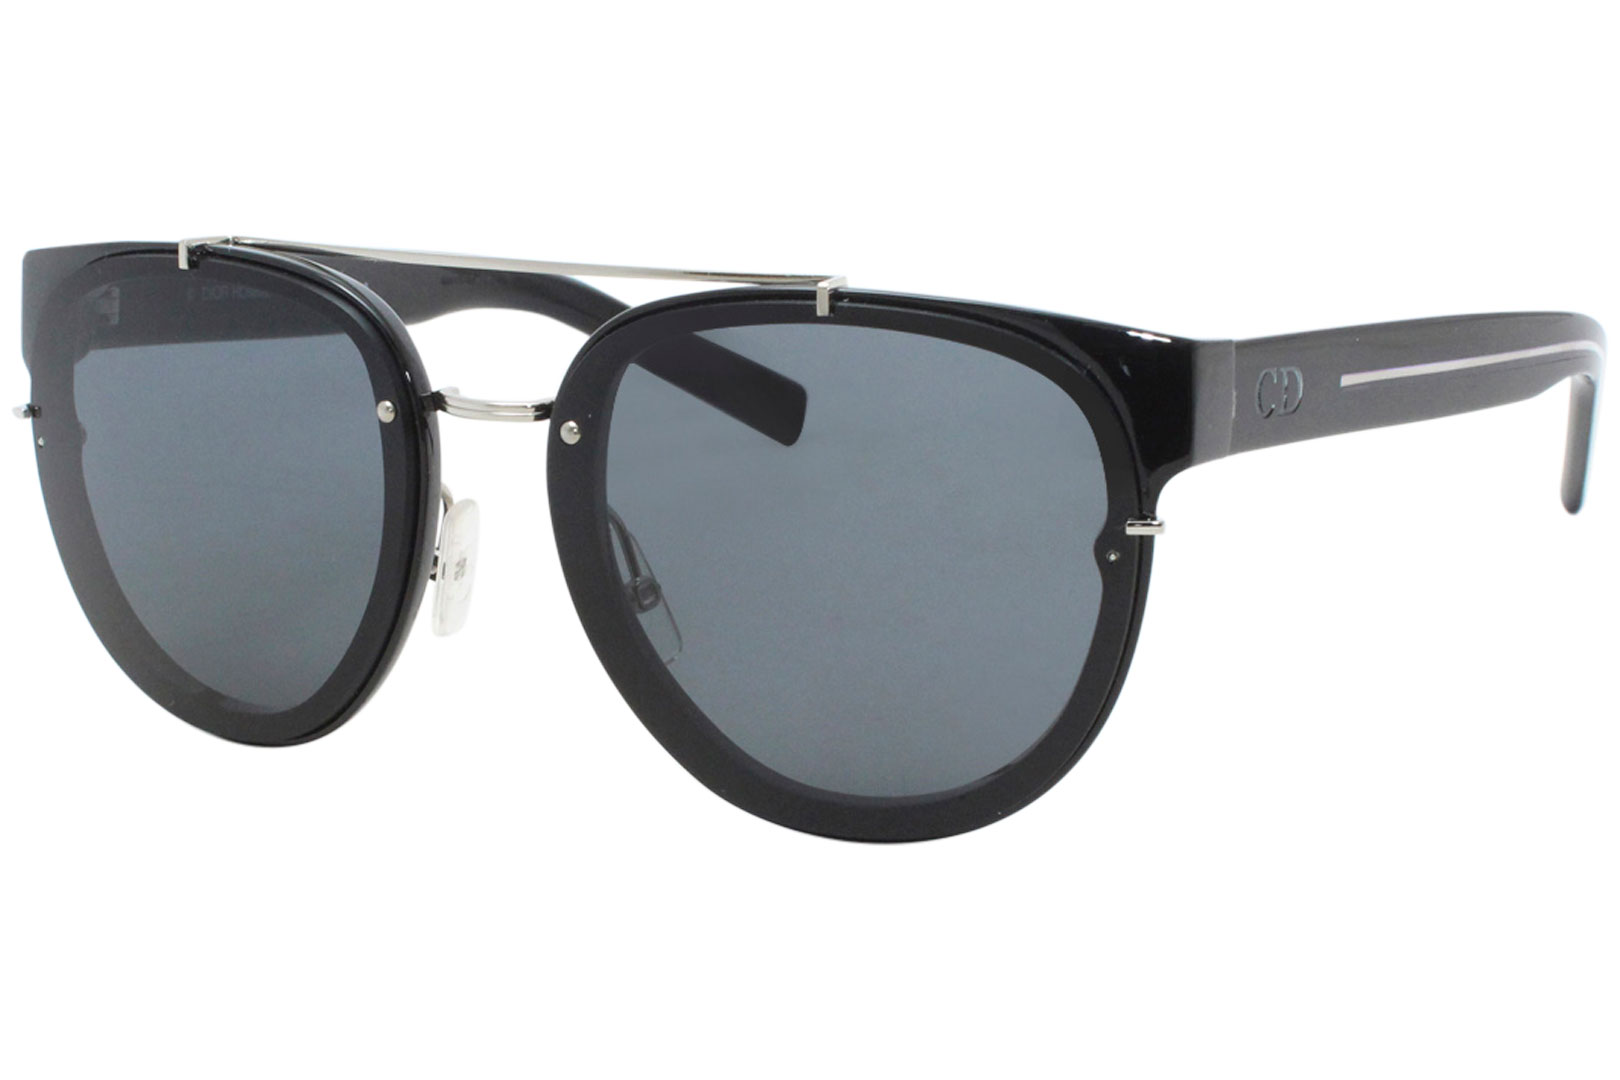 Dior Homme BlackTie143/S Sunglasses Men's Round Shades | JoyLot.com